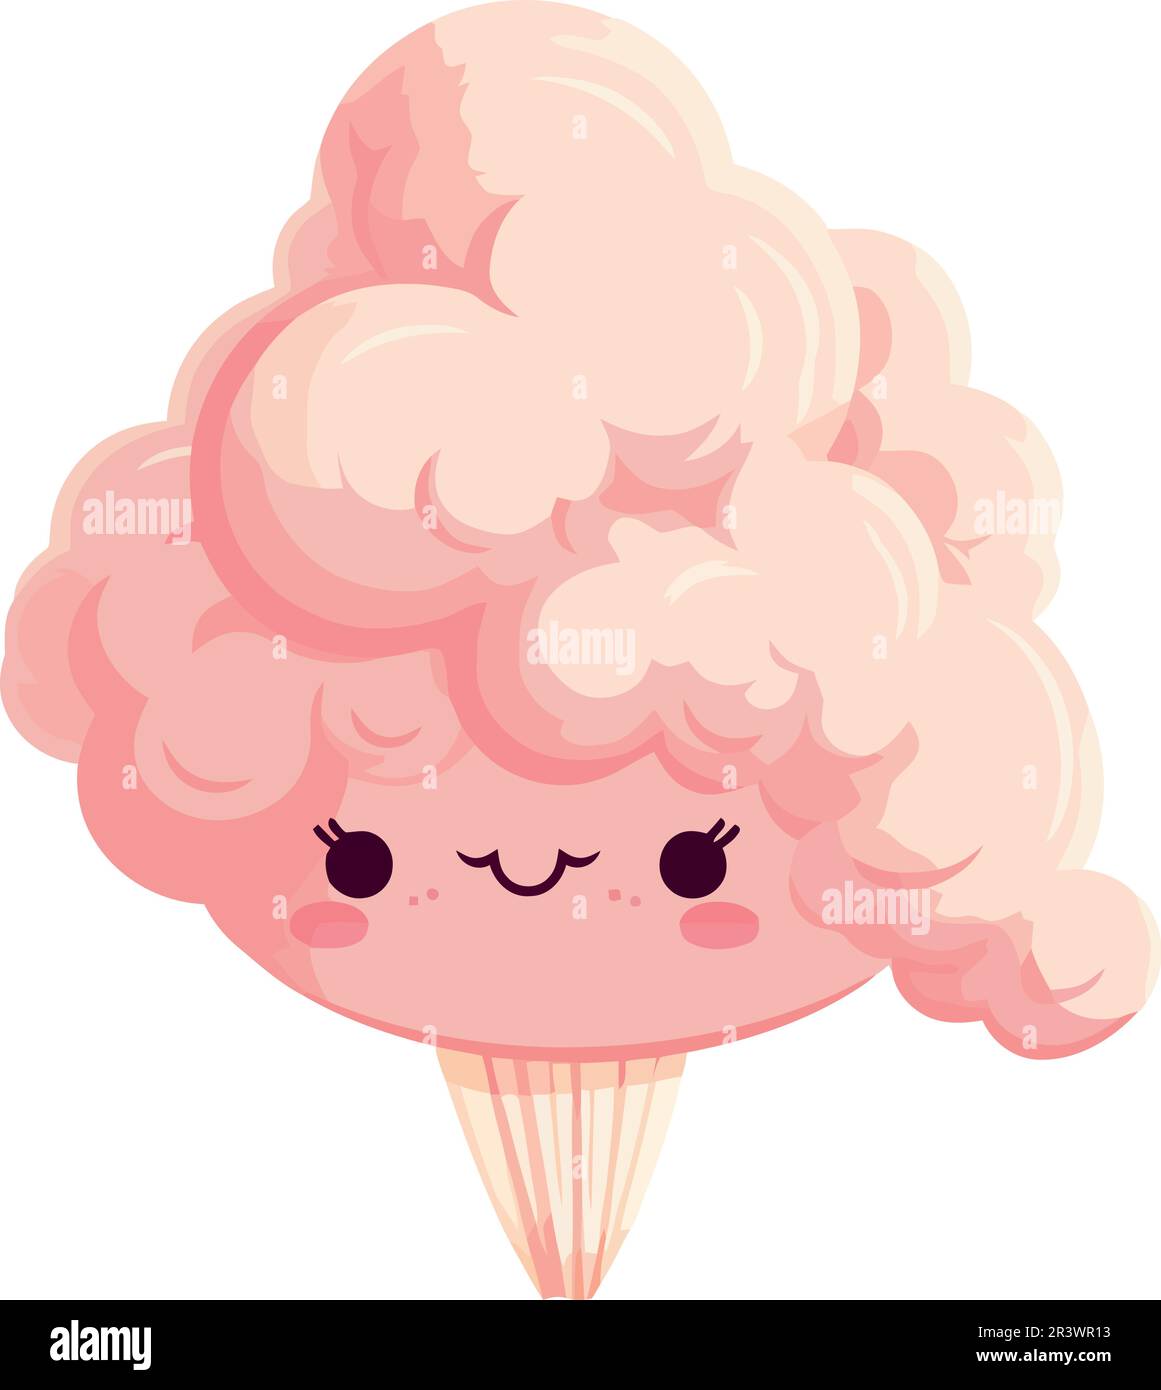 dulce algodón azúcar kawaii carácter rosa Imagen Vector de stock - Alamy